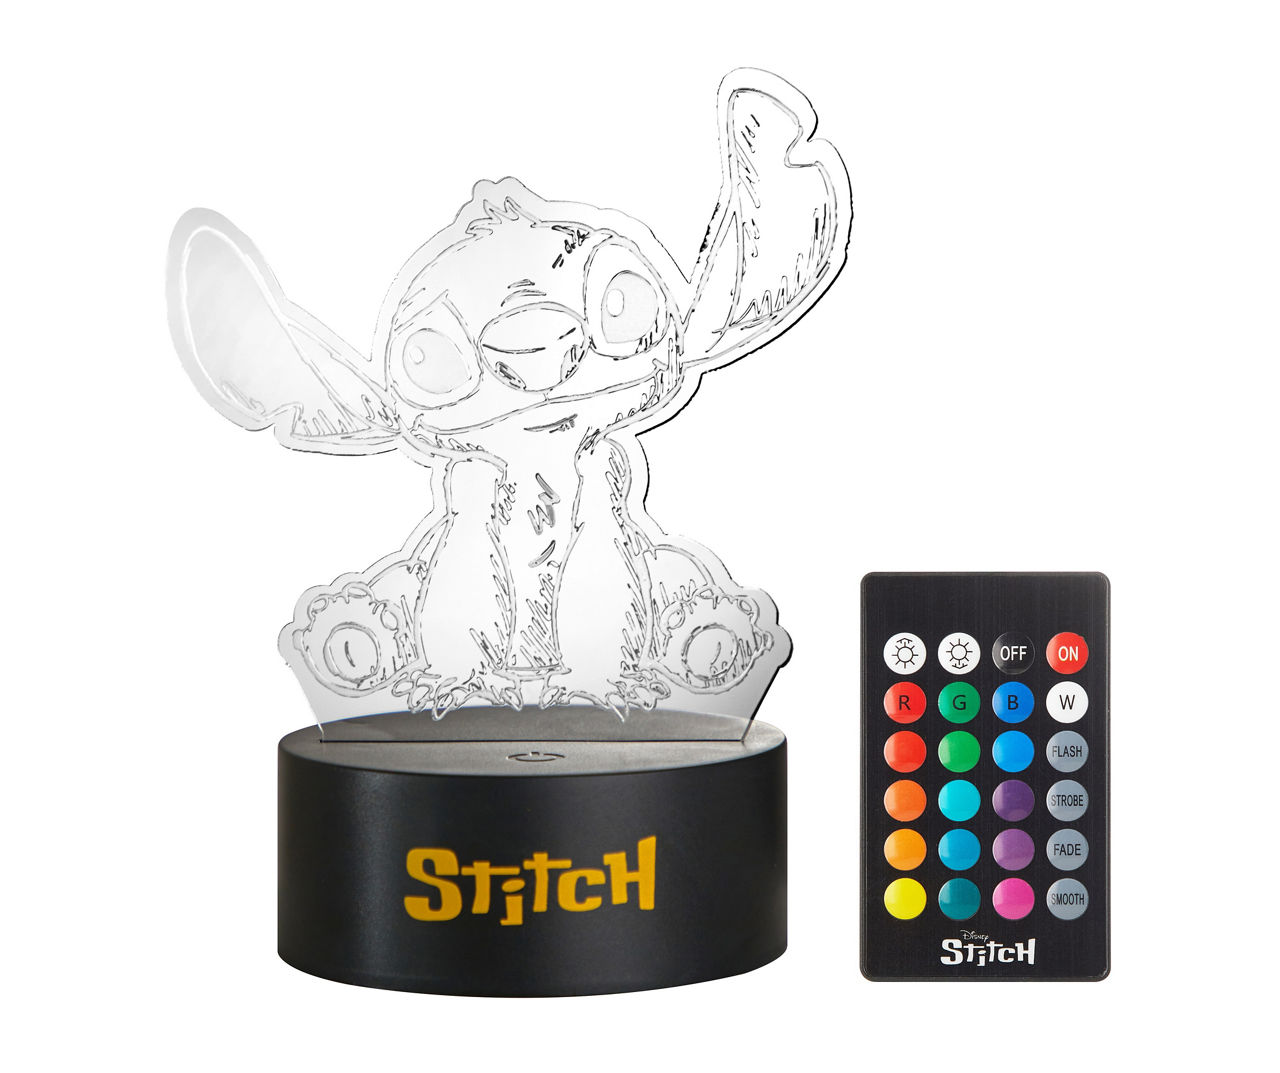 Stitch Personalized FREE Stitch LED Night Light Lamp with Remote